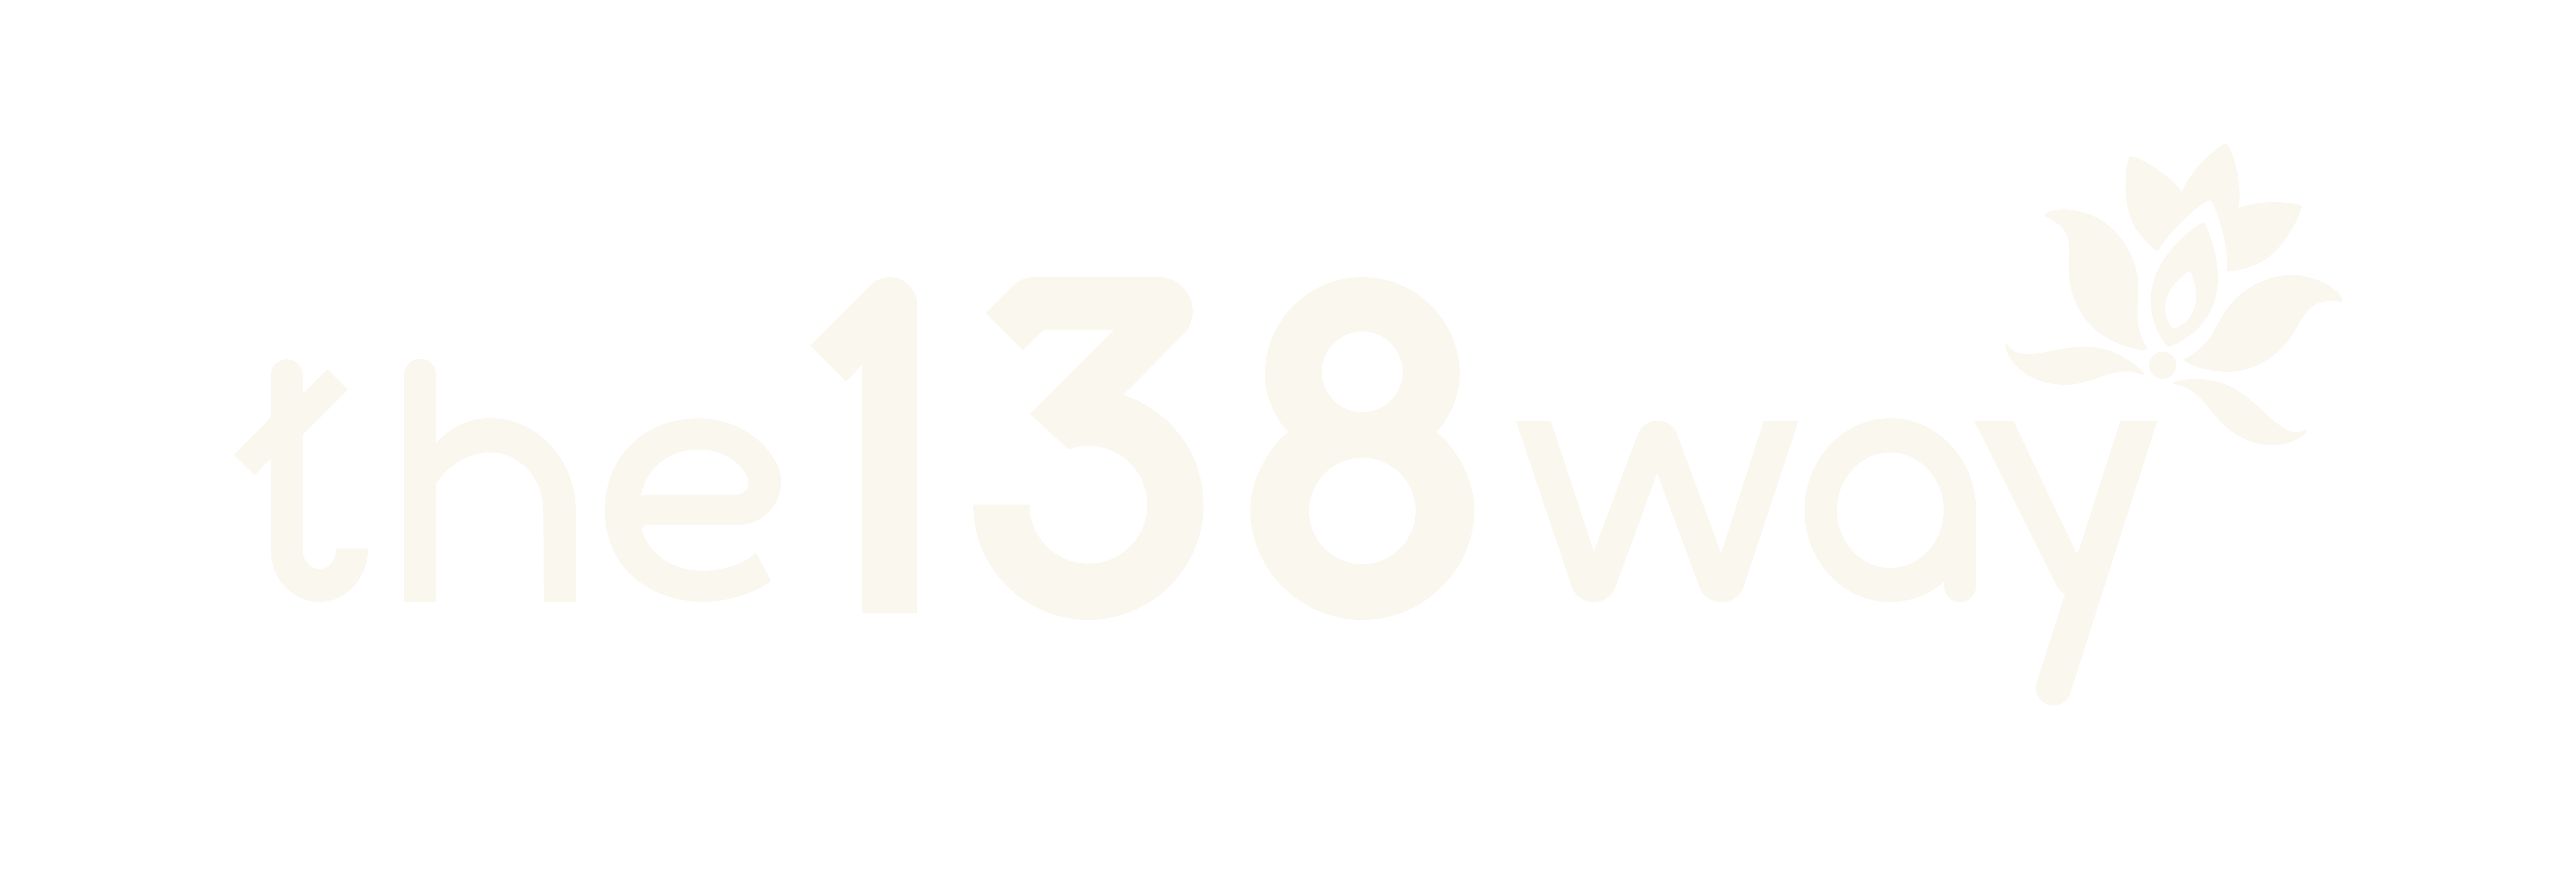 The 138 Way